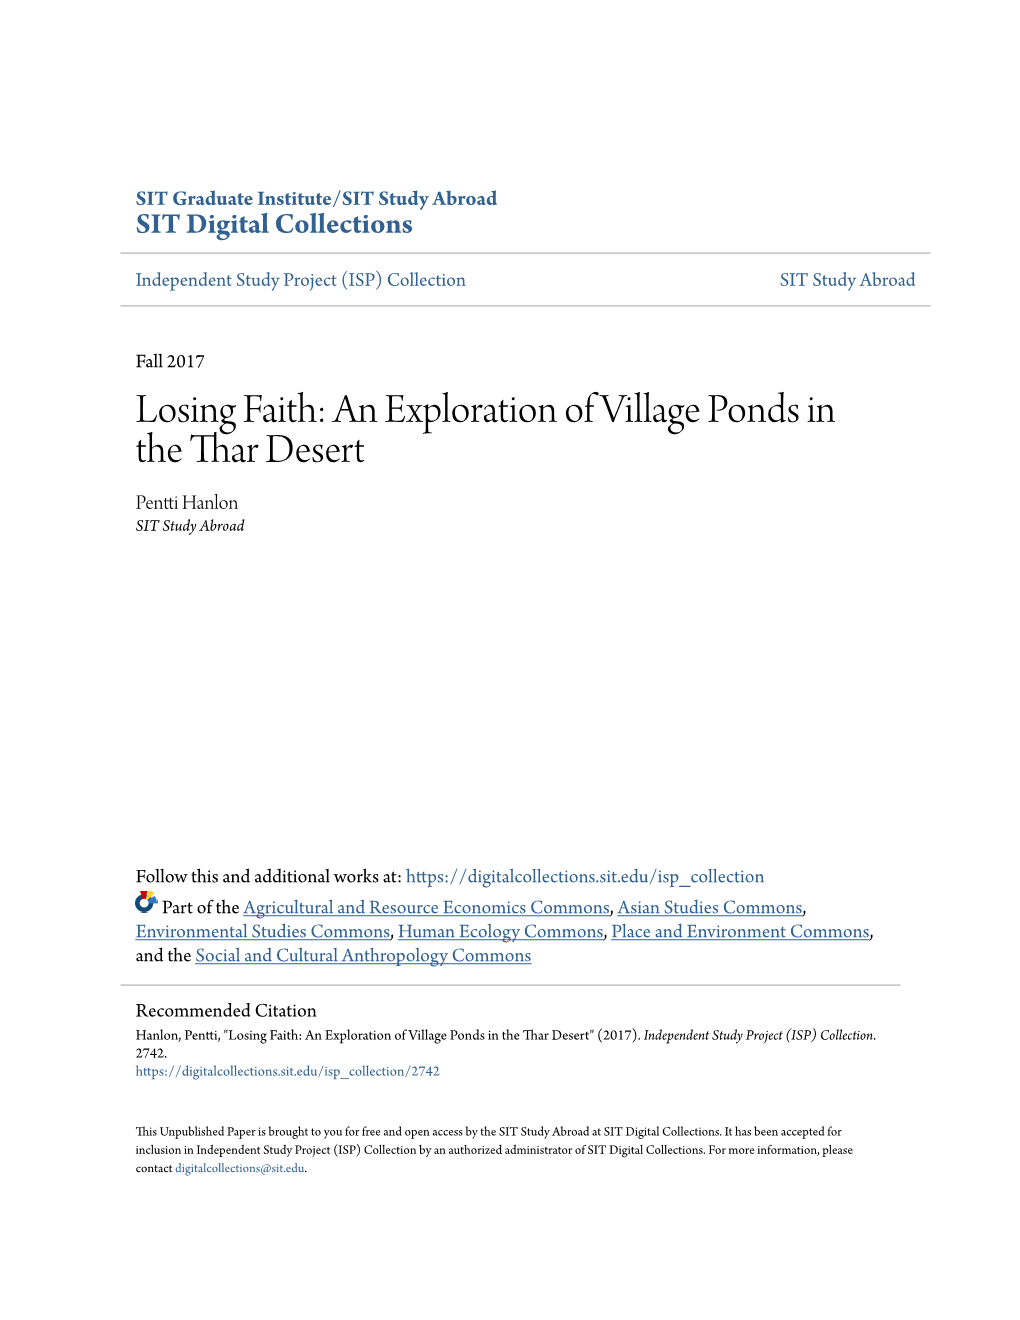 Losing Faith: an Exploration of Village Ponds in the Thar Desert Pentti Hanlon SIT Study Abroad